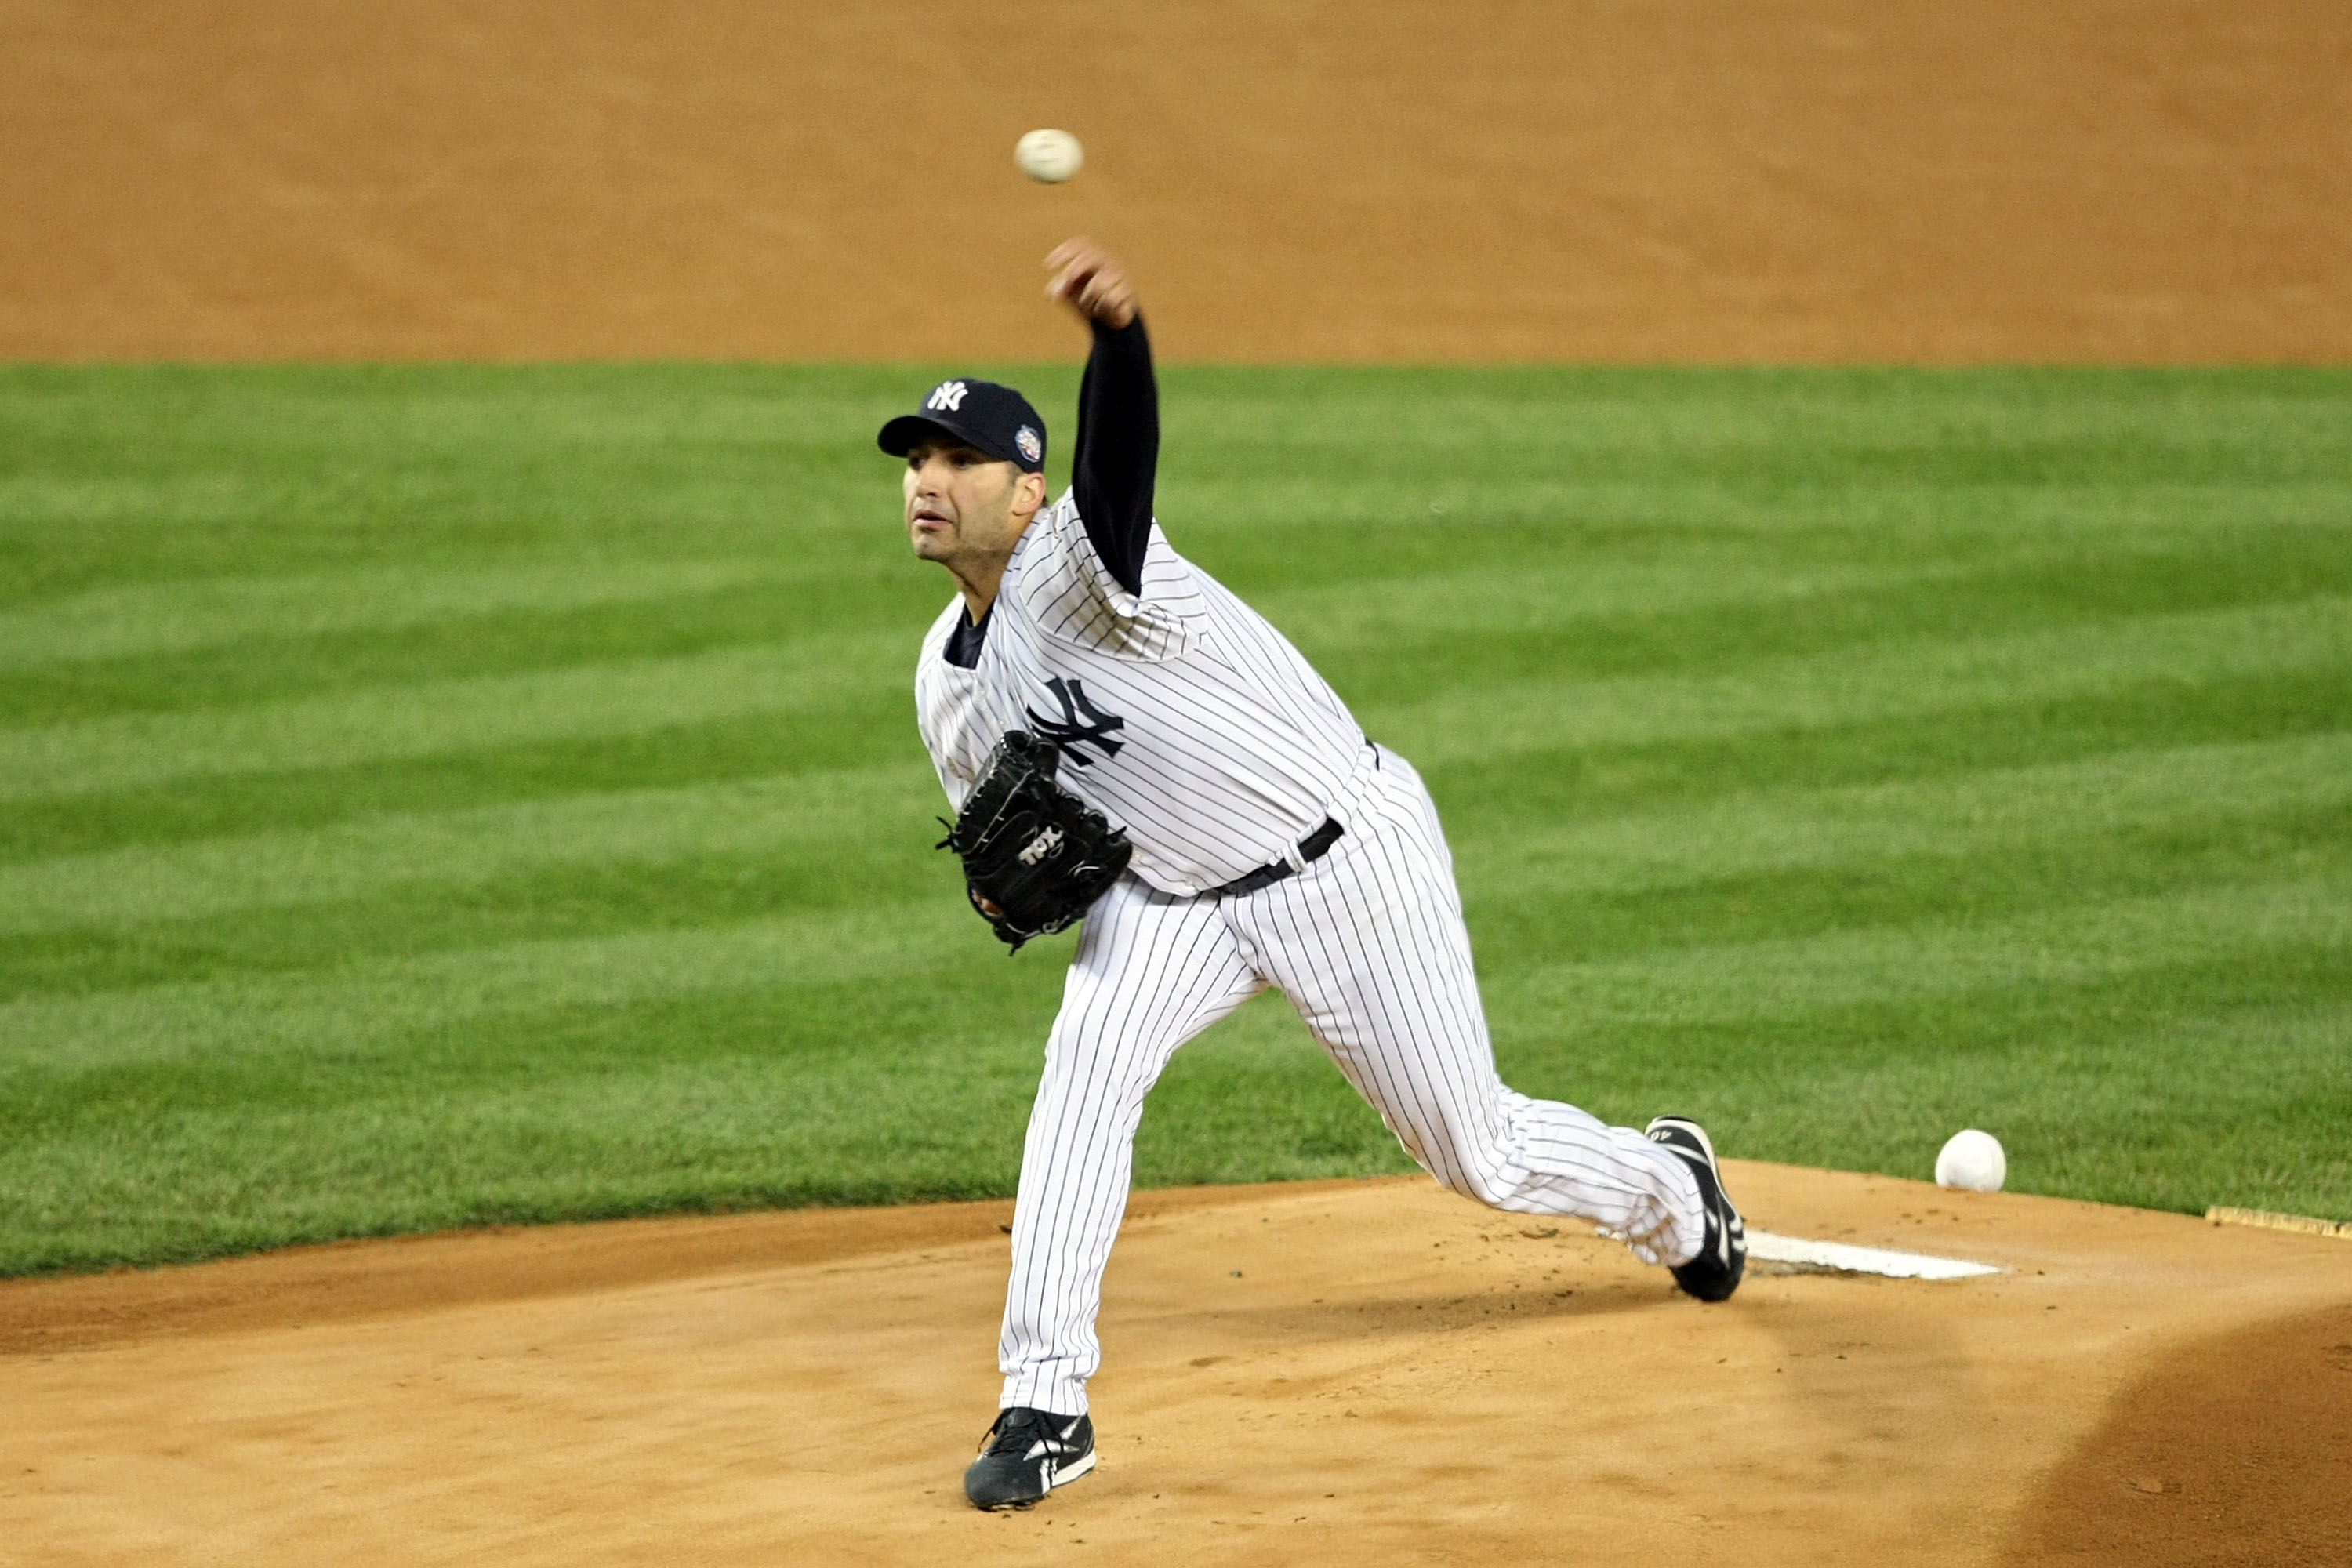 File:Cole Hamels pitching 2010.jpg - Wikipedia